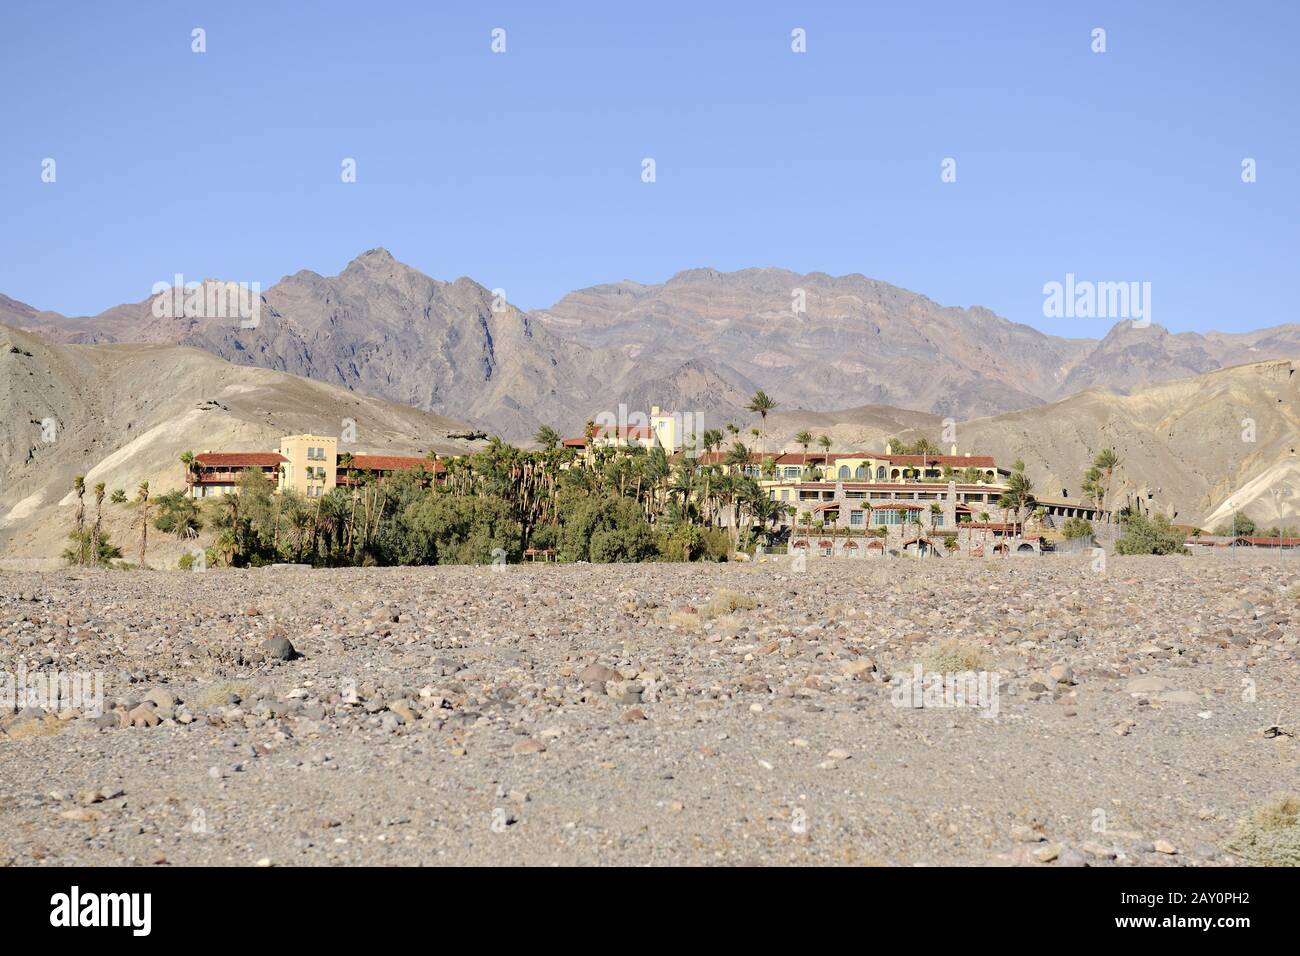 Hotelanlage, Furnace Creek Inn, Death Valley Nationalpark, Kalif Stock Photo